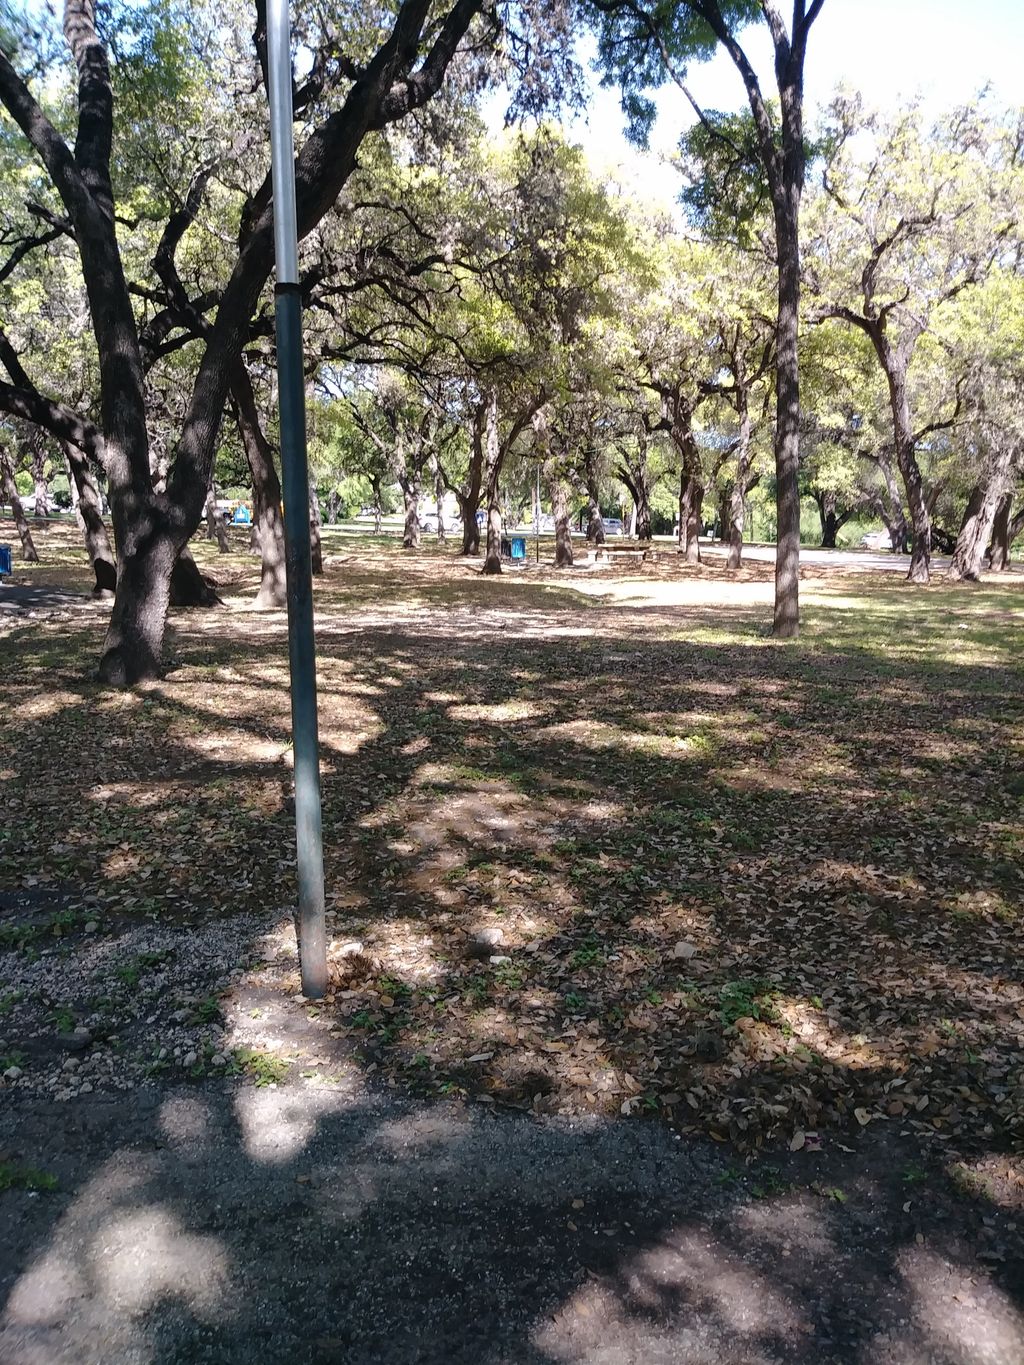 Olmos Basin Park